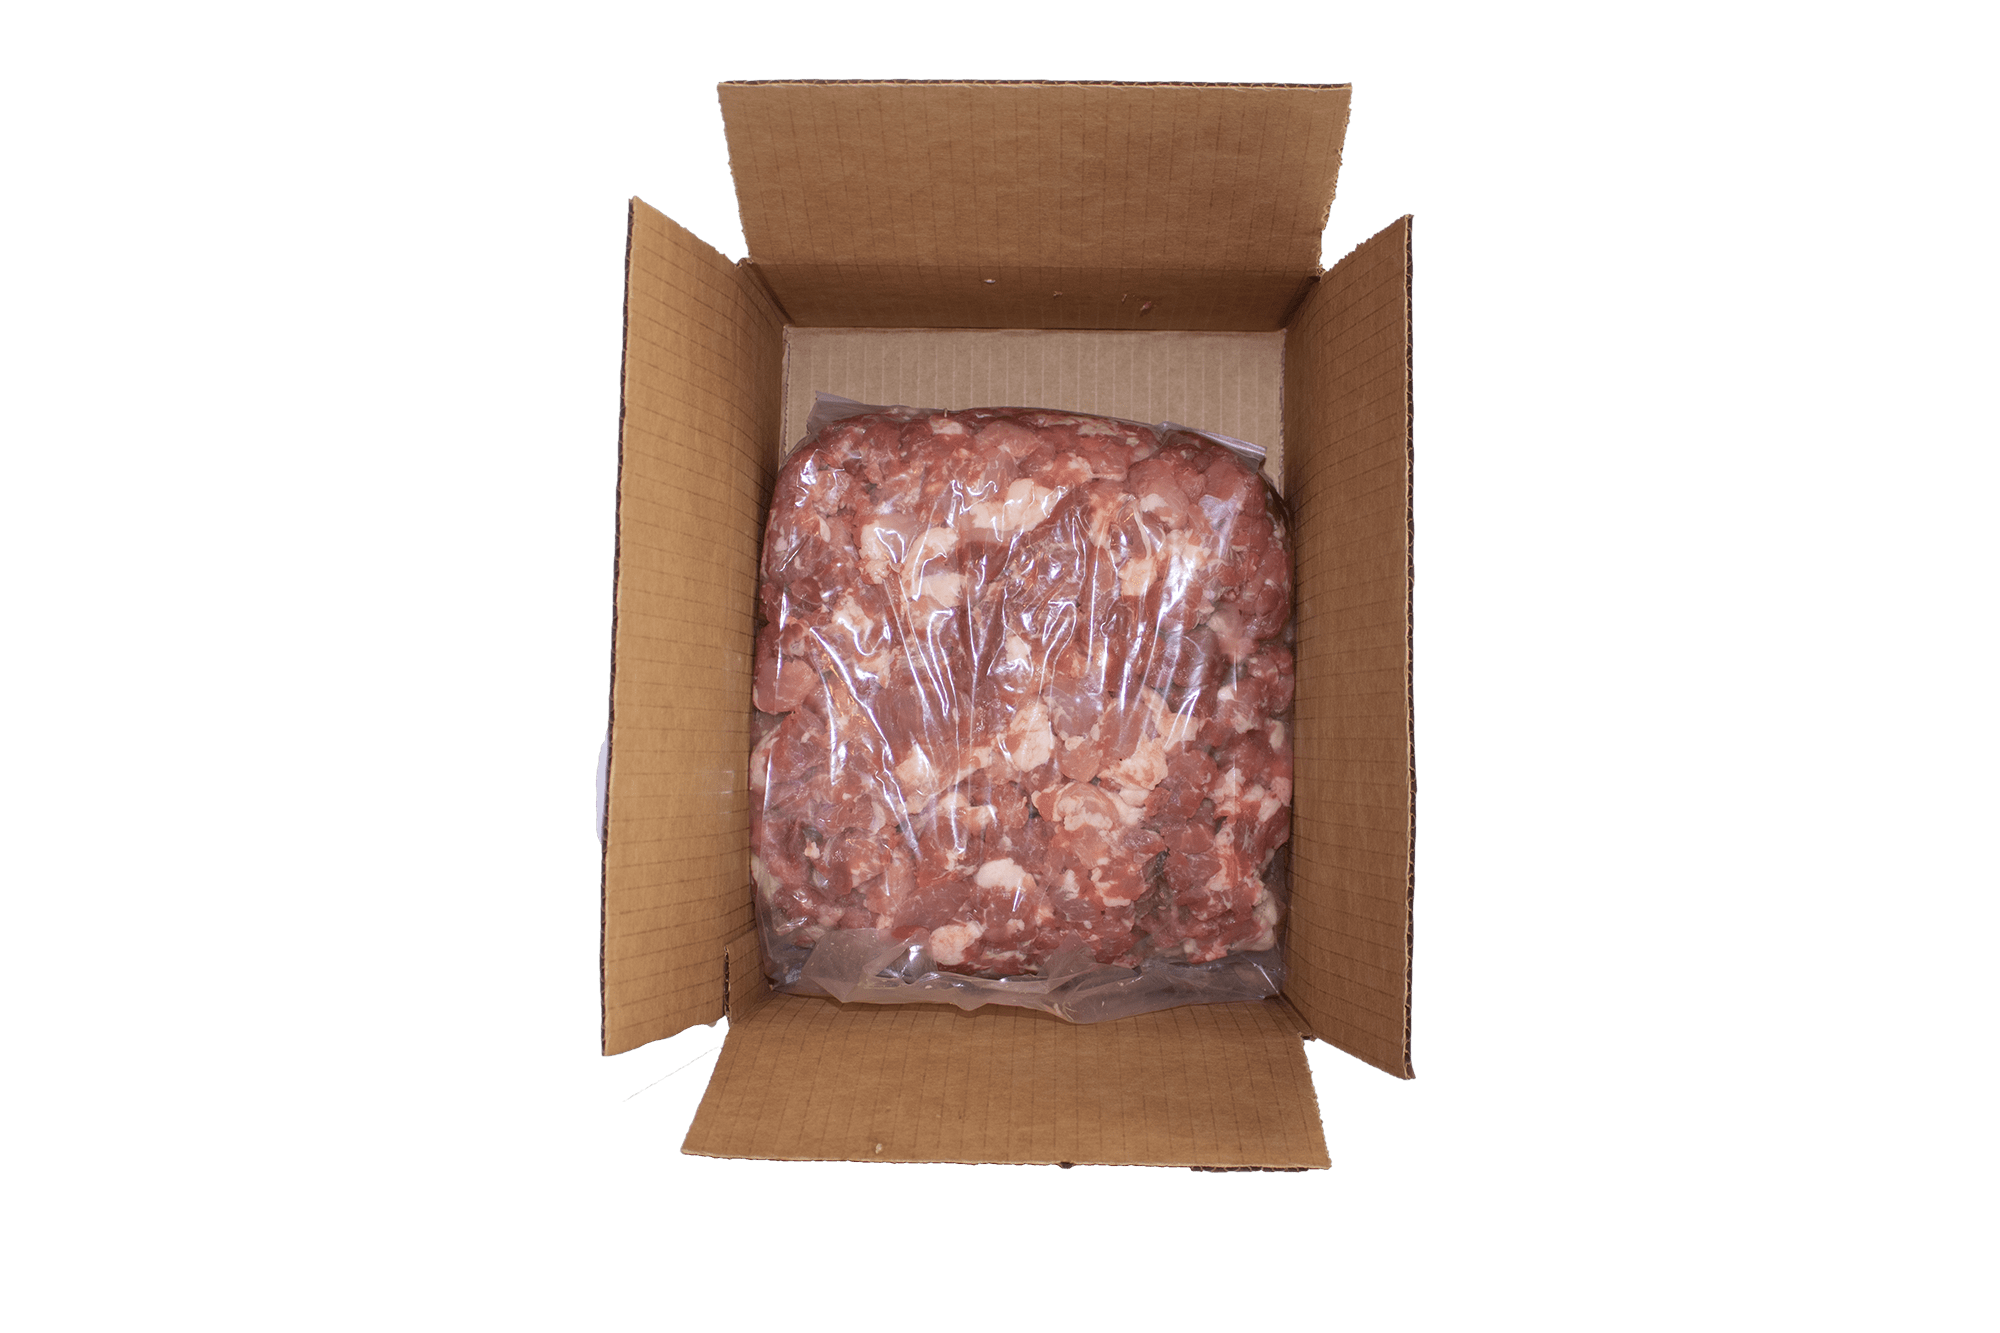 VARIED 1/2” TO 1” DICED PORK ITEM #141 Packaged Meat